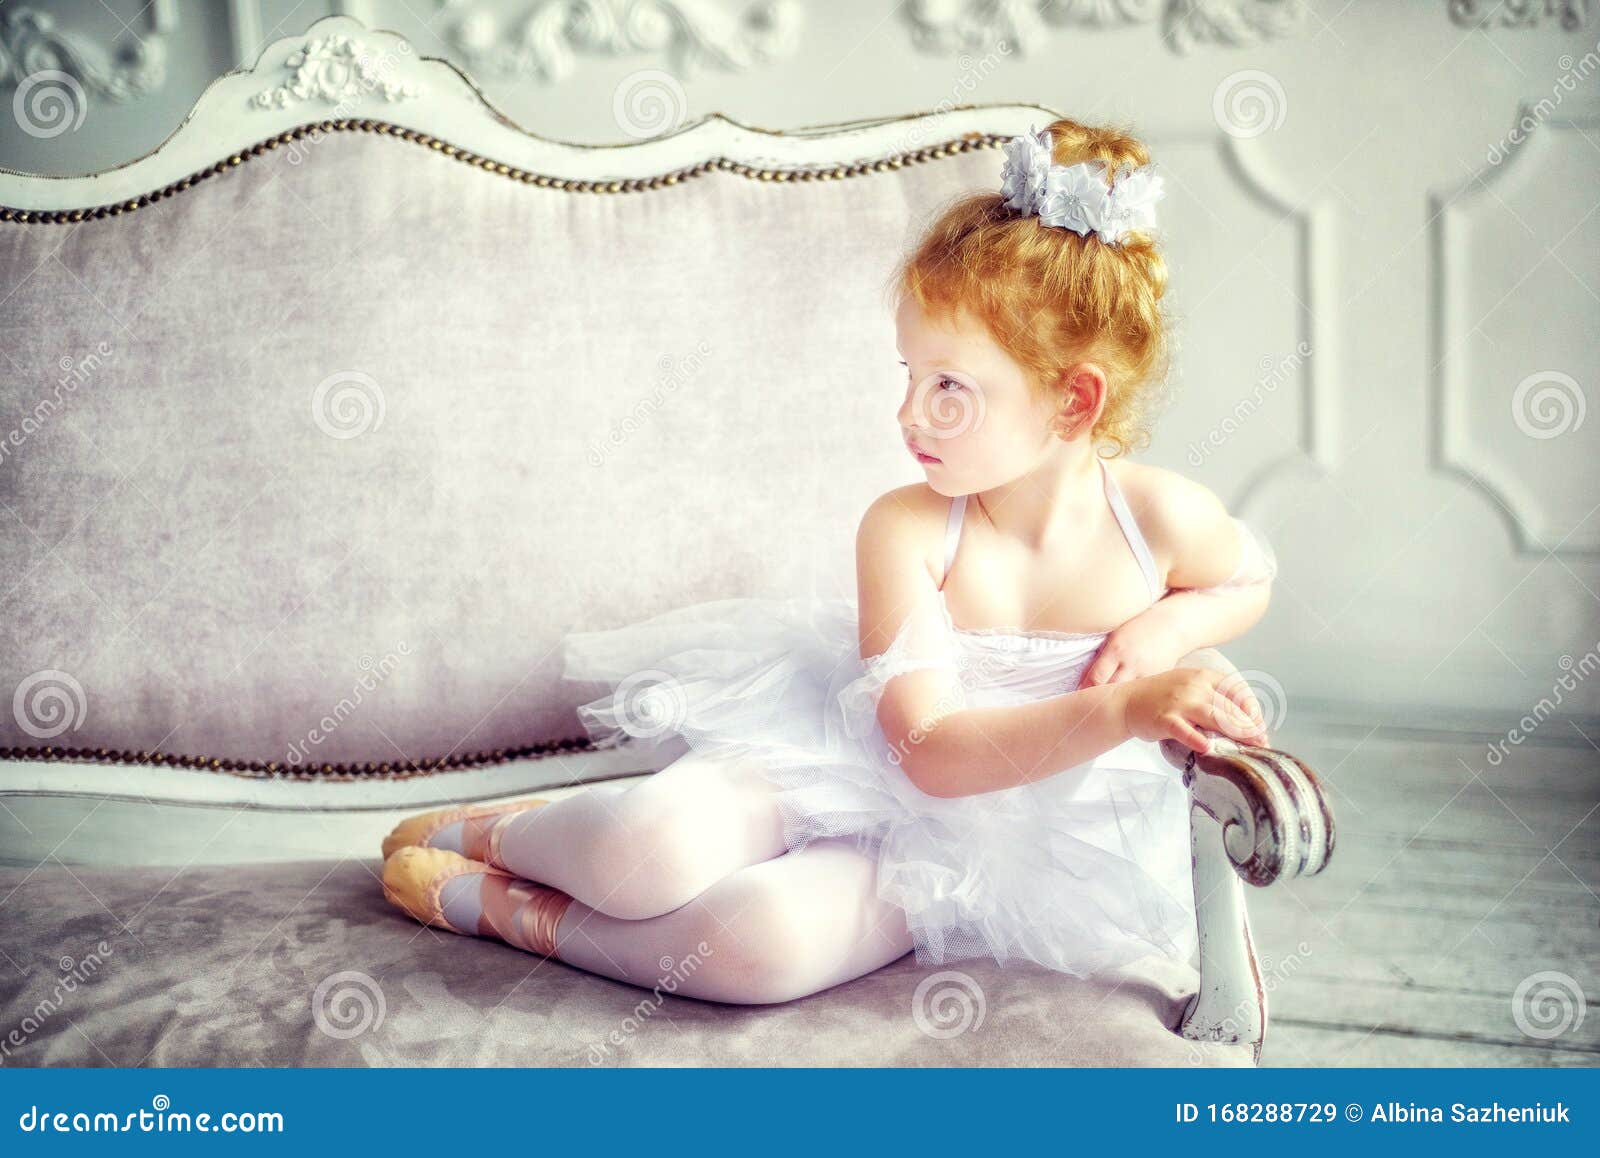 Portrait Little Years Old Blonde Curly Ballerina Sitting in Light Room on Sofa in Ballet Dress White Tutu Pointes. Stock Image - Image of ballerina, ballet: 168288729